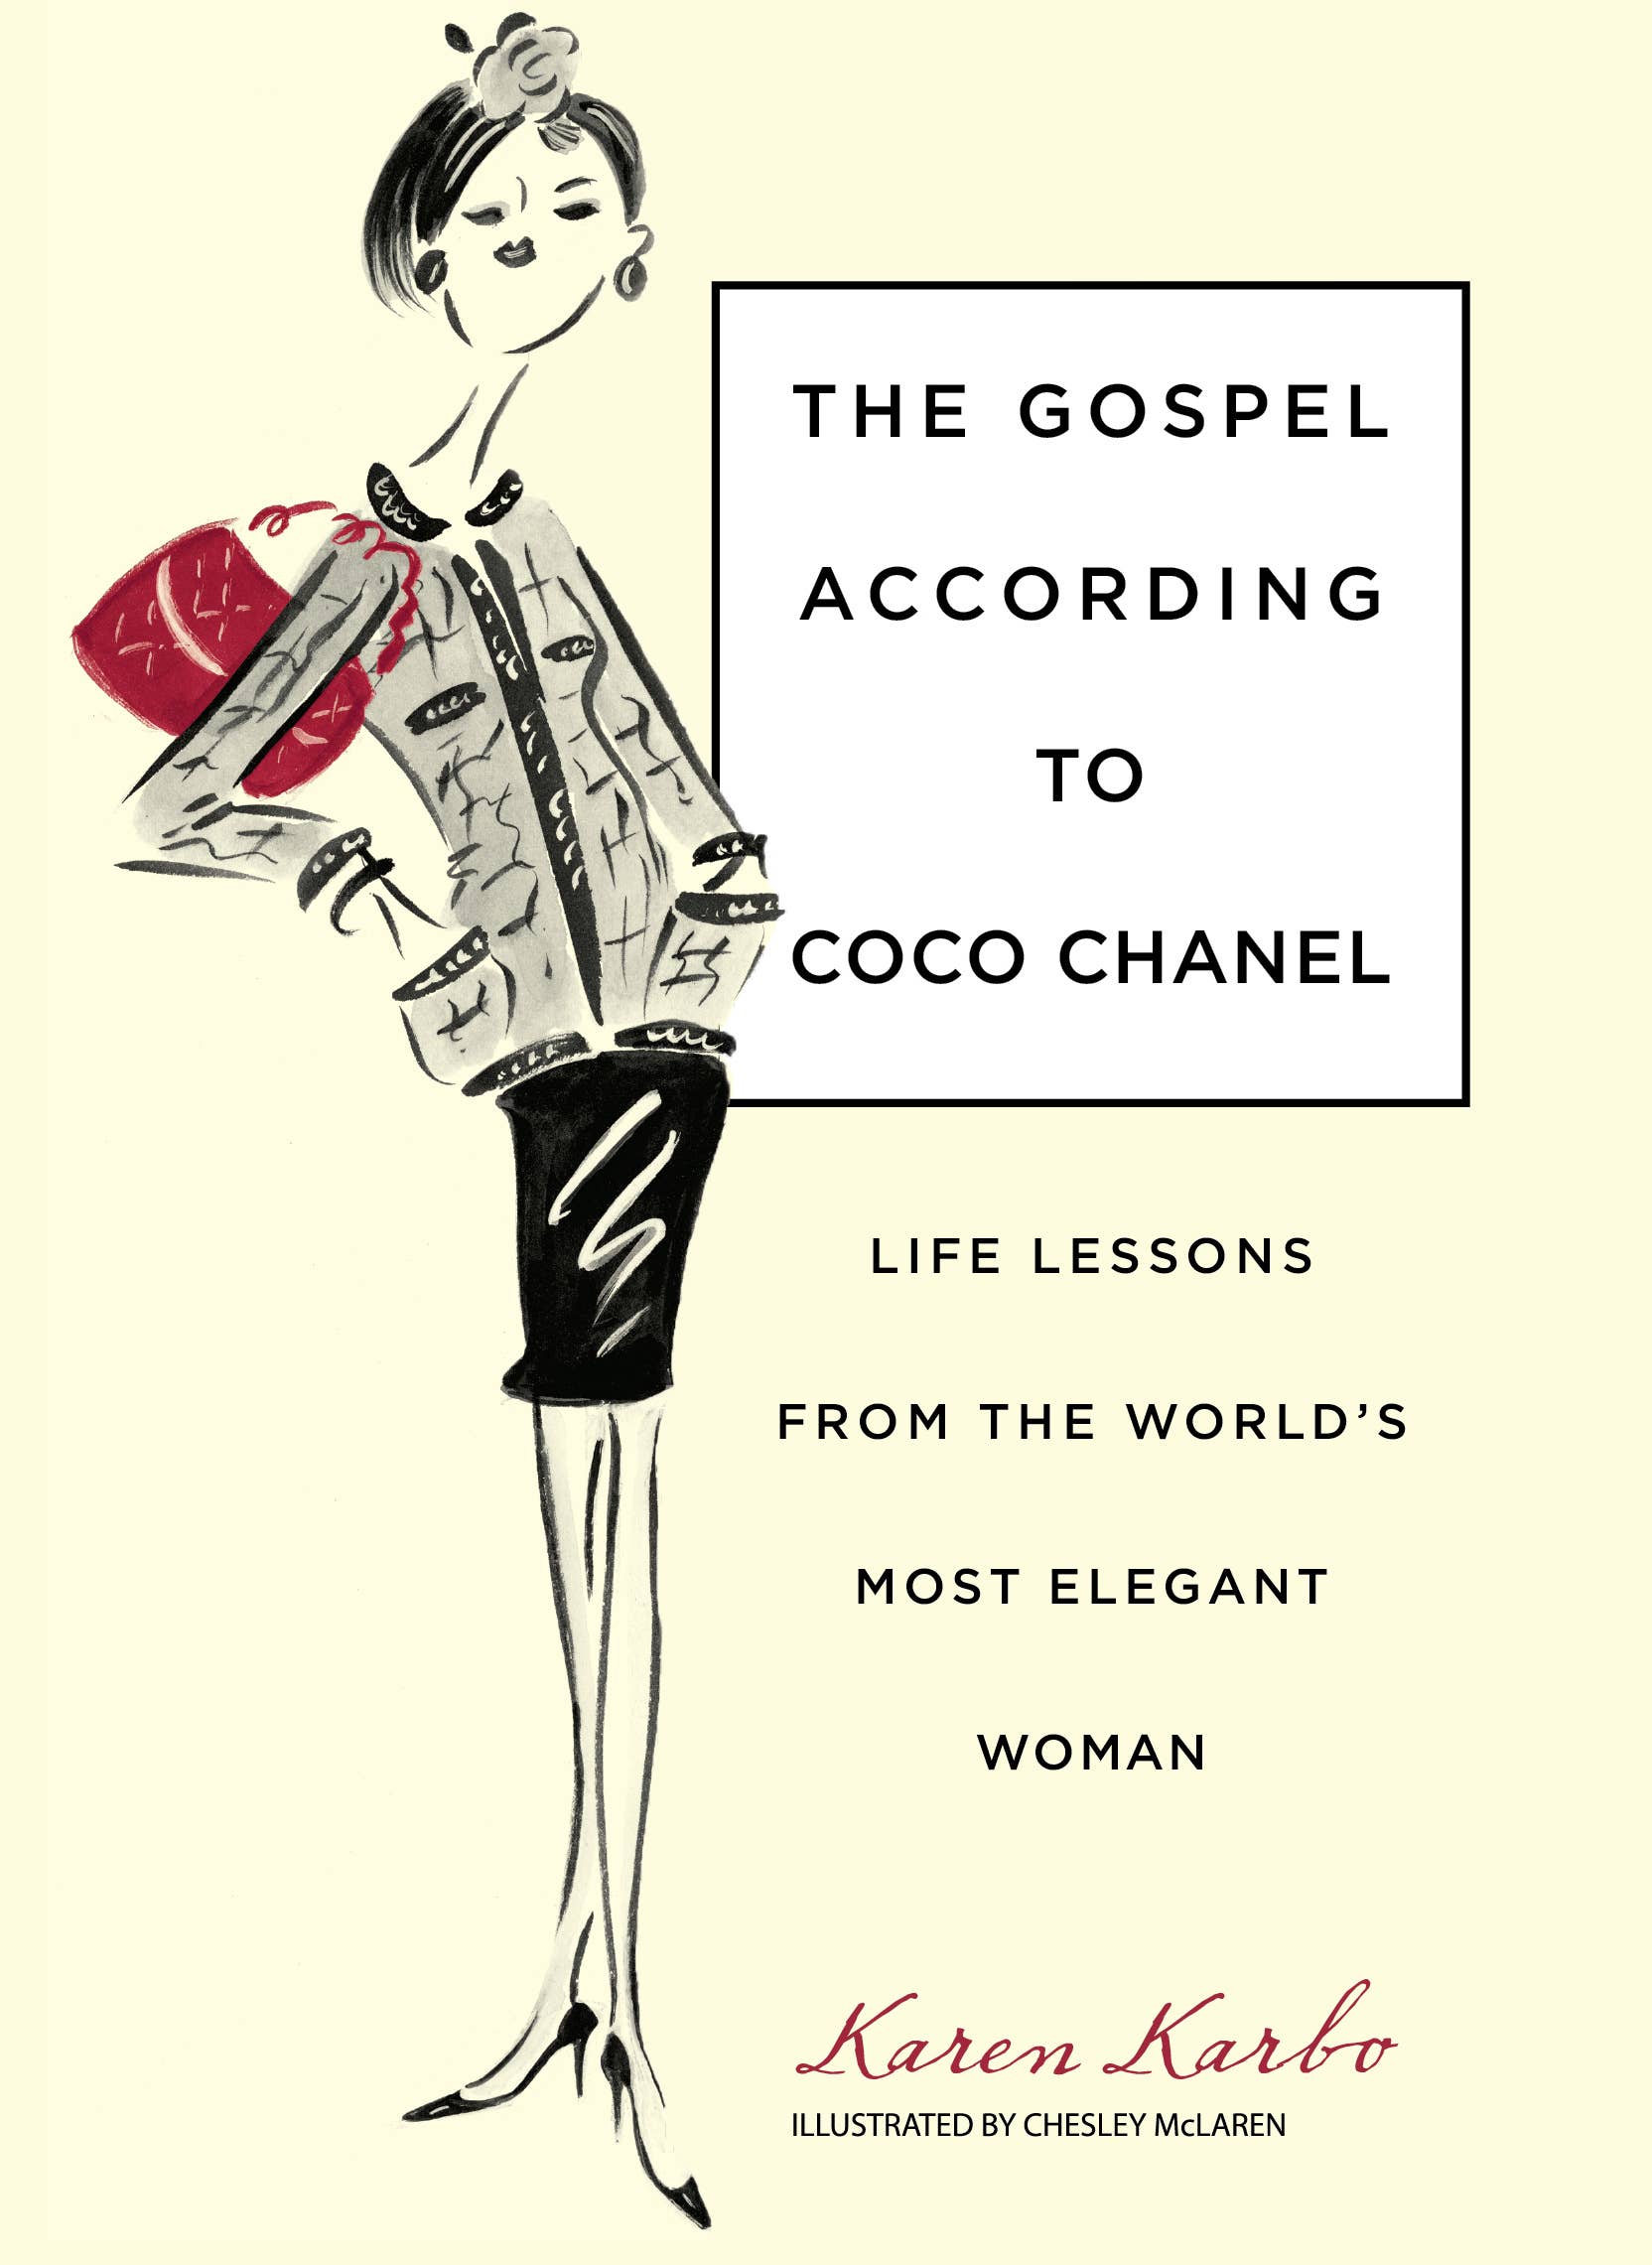 Coco Chanel: The Life of a Fashion Icon